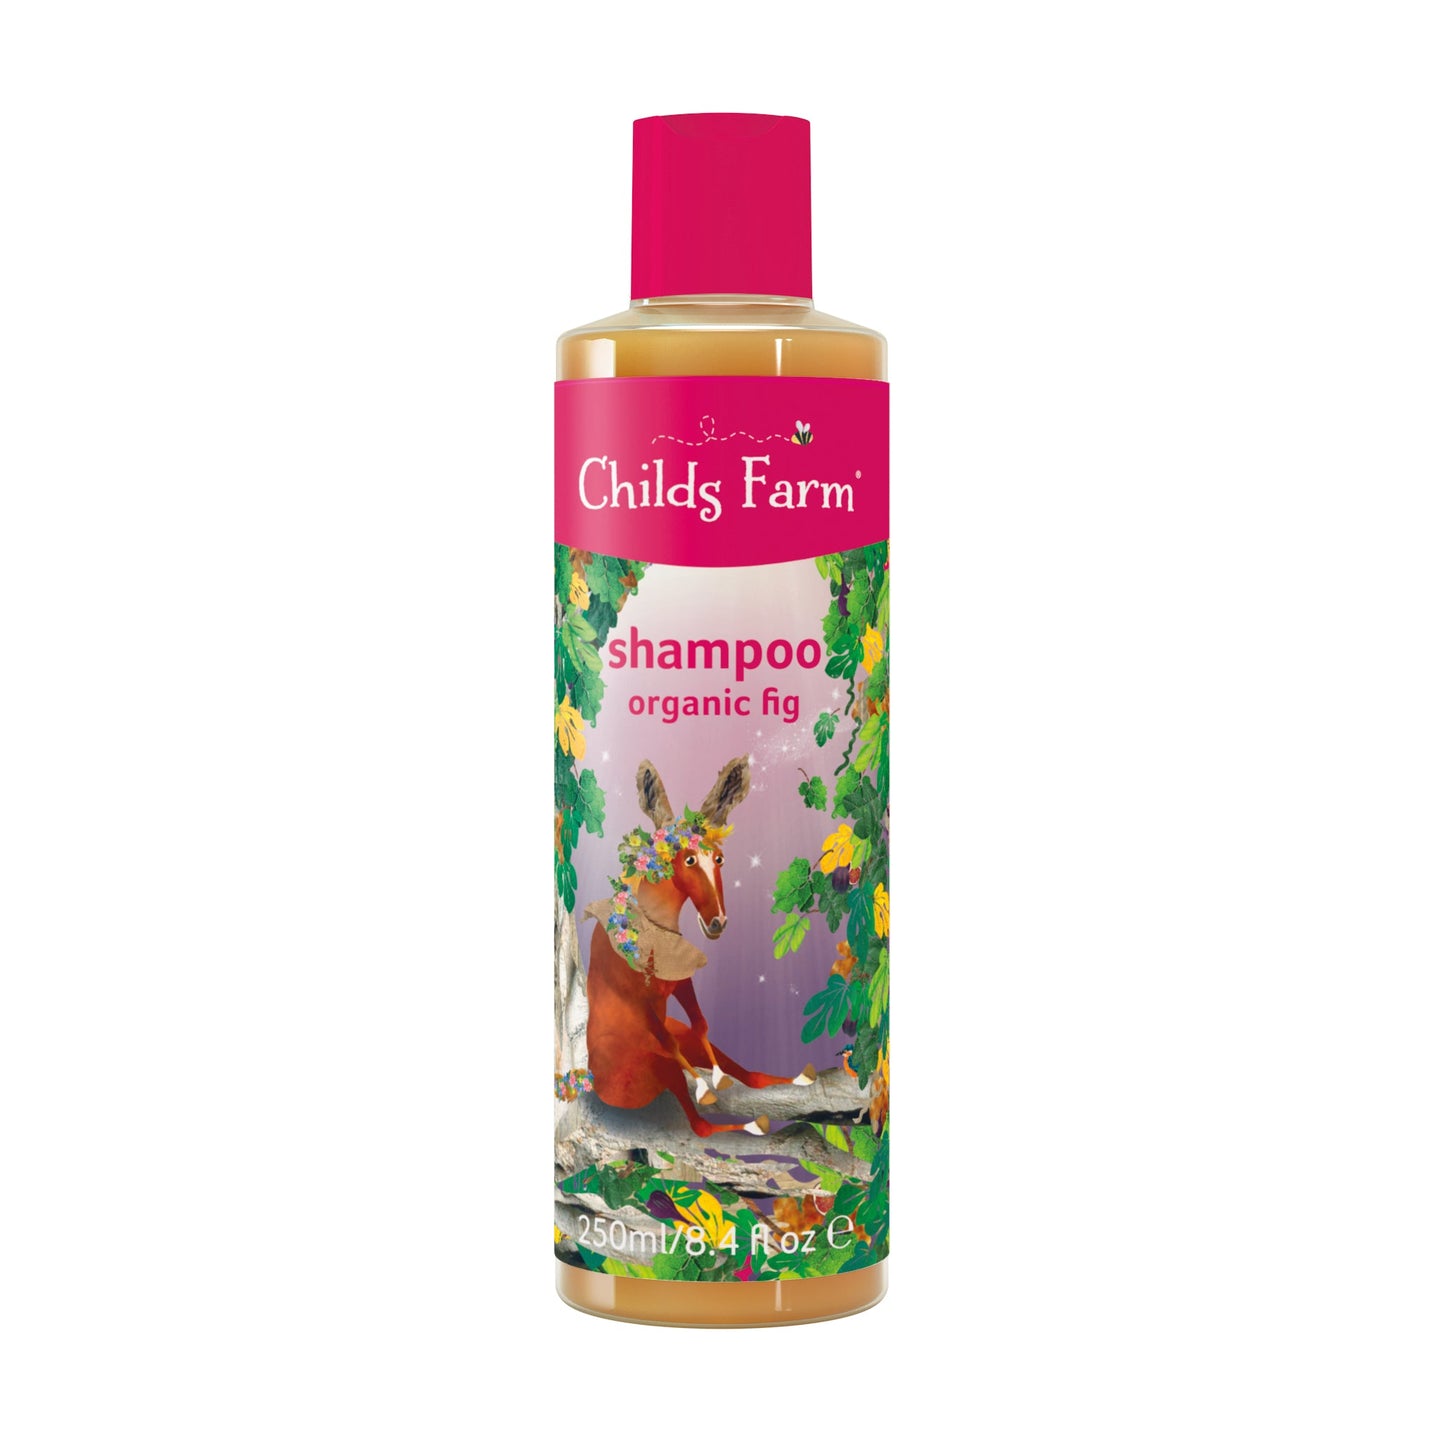 Childs Farm shampoo organic fig